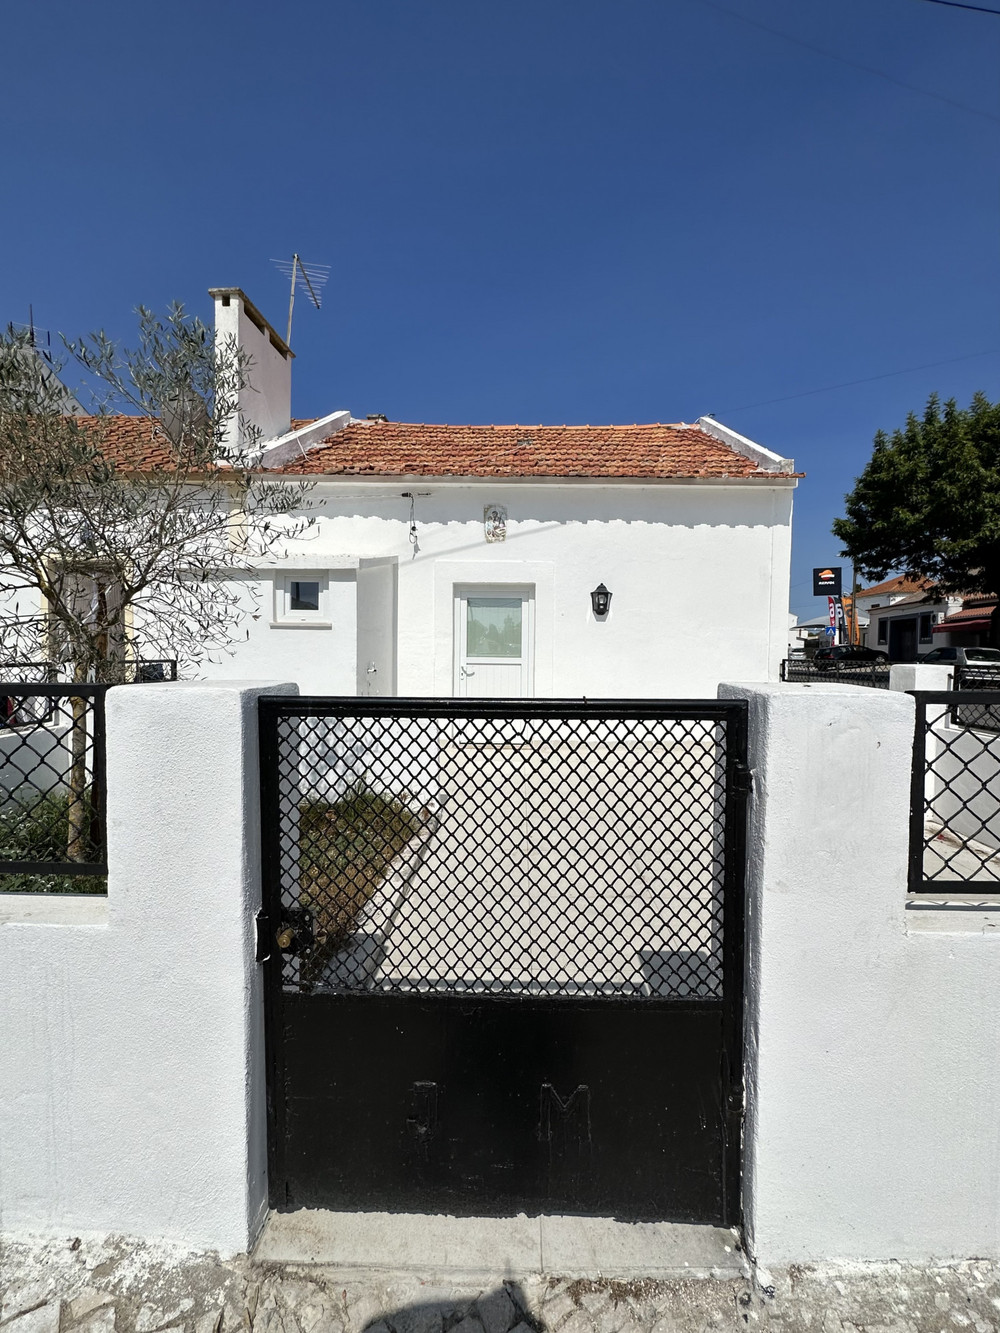 COZY VILLAGE HOUSE-30 min from Lisbon